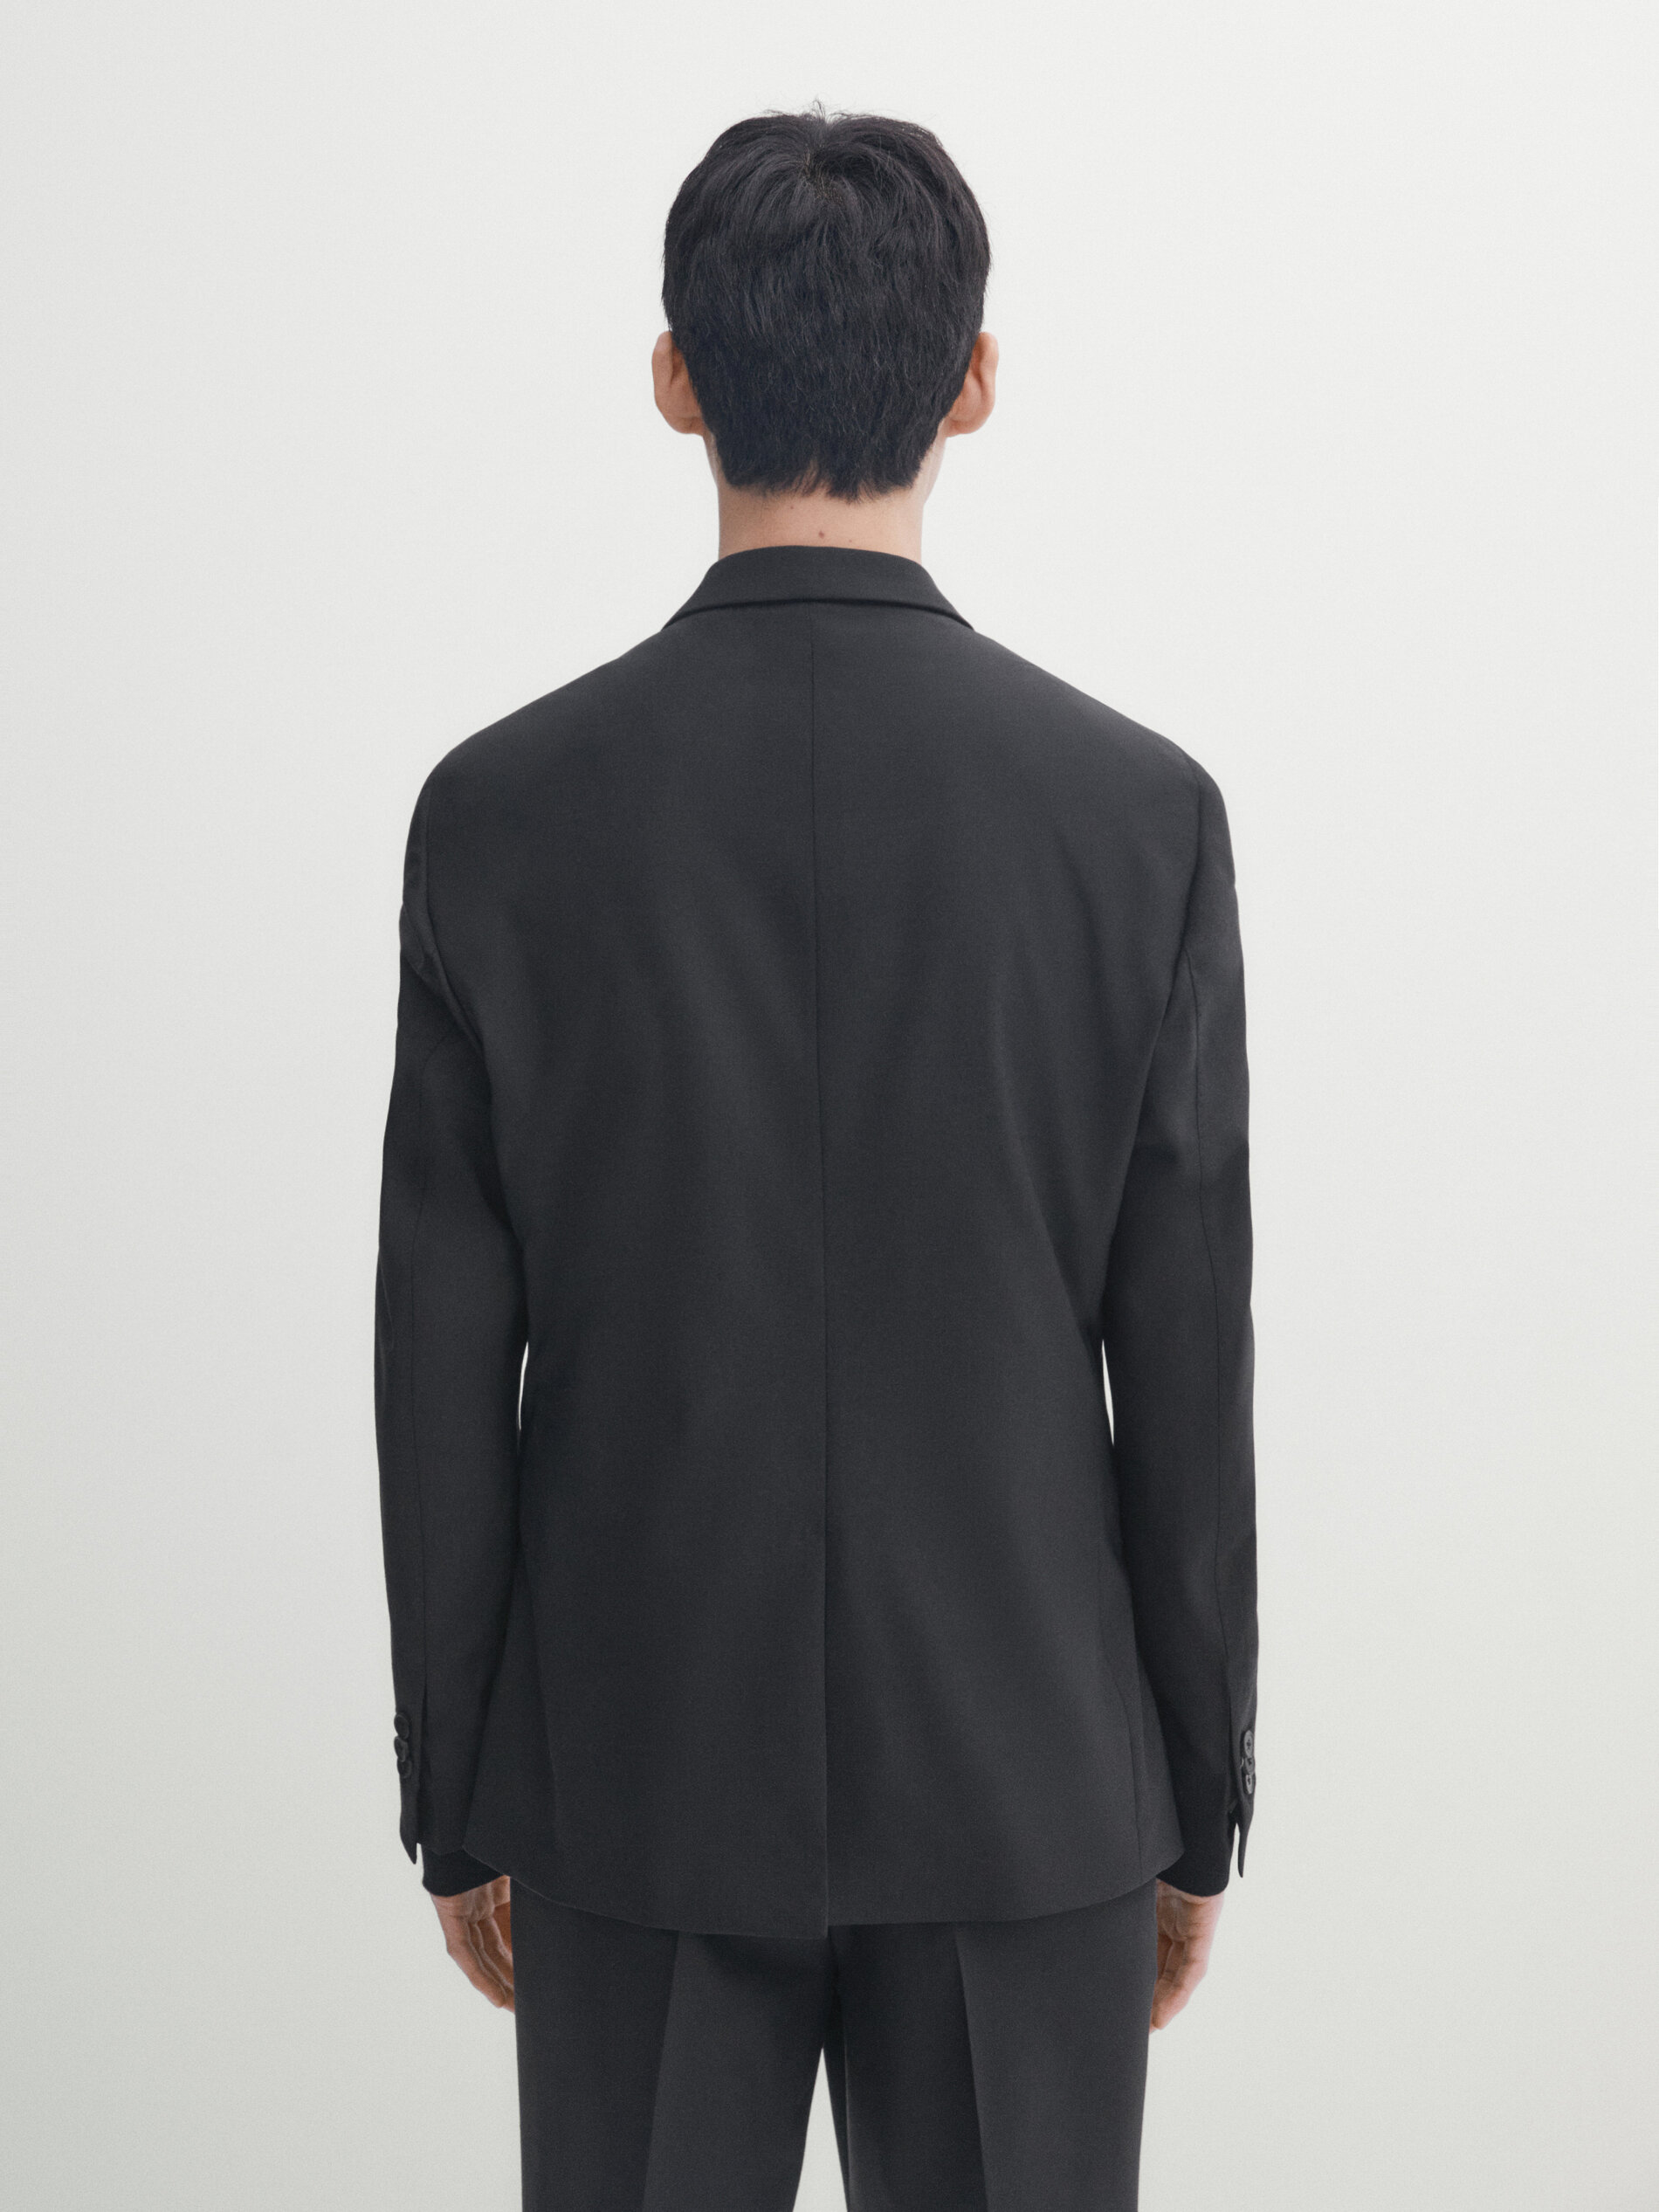 Black Tuxedo Suit in Designer 6 Pc Set for Men Wedding | Paridhanin